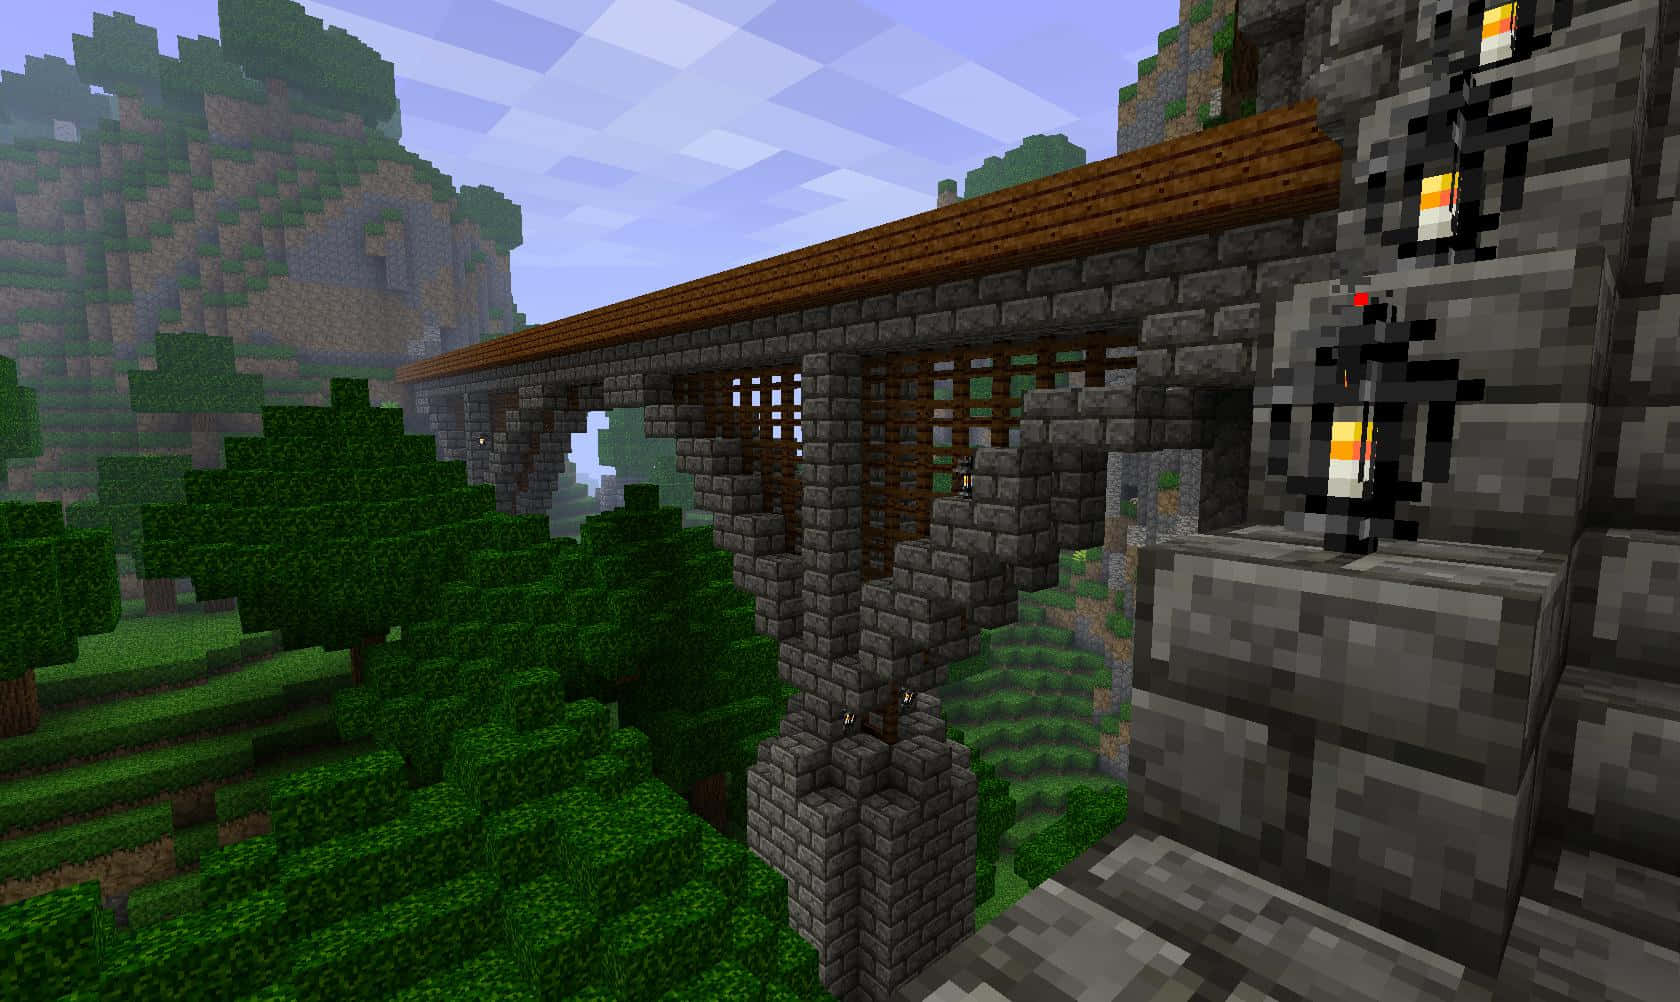 Spectacular Minecraft Bridge amidst a serene landscape Wallpaper